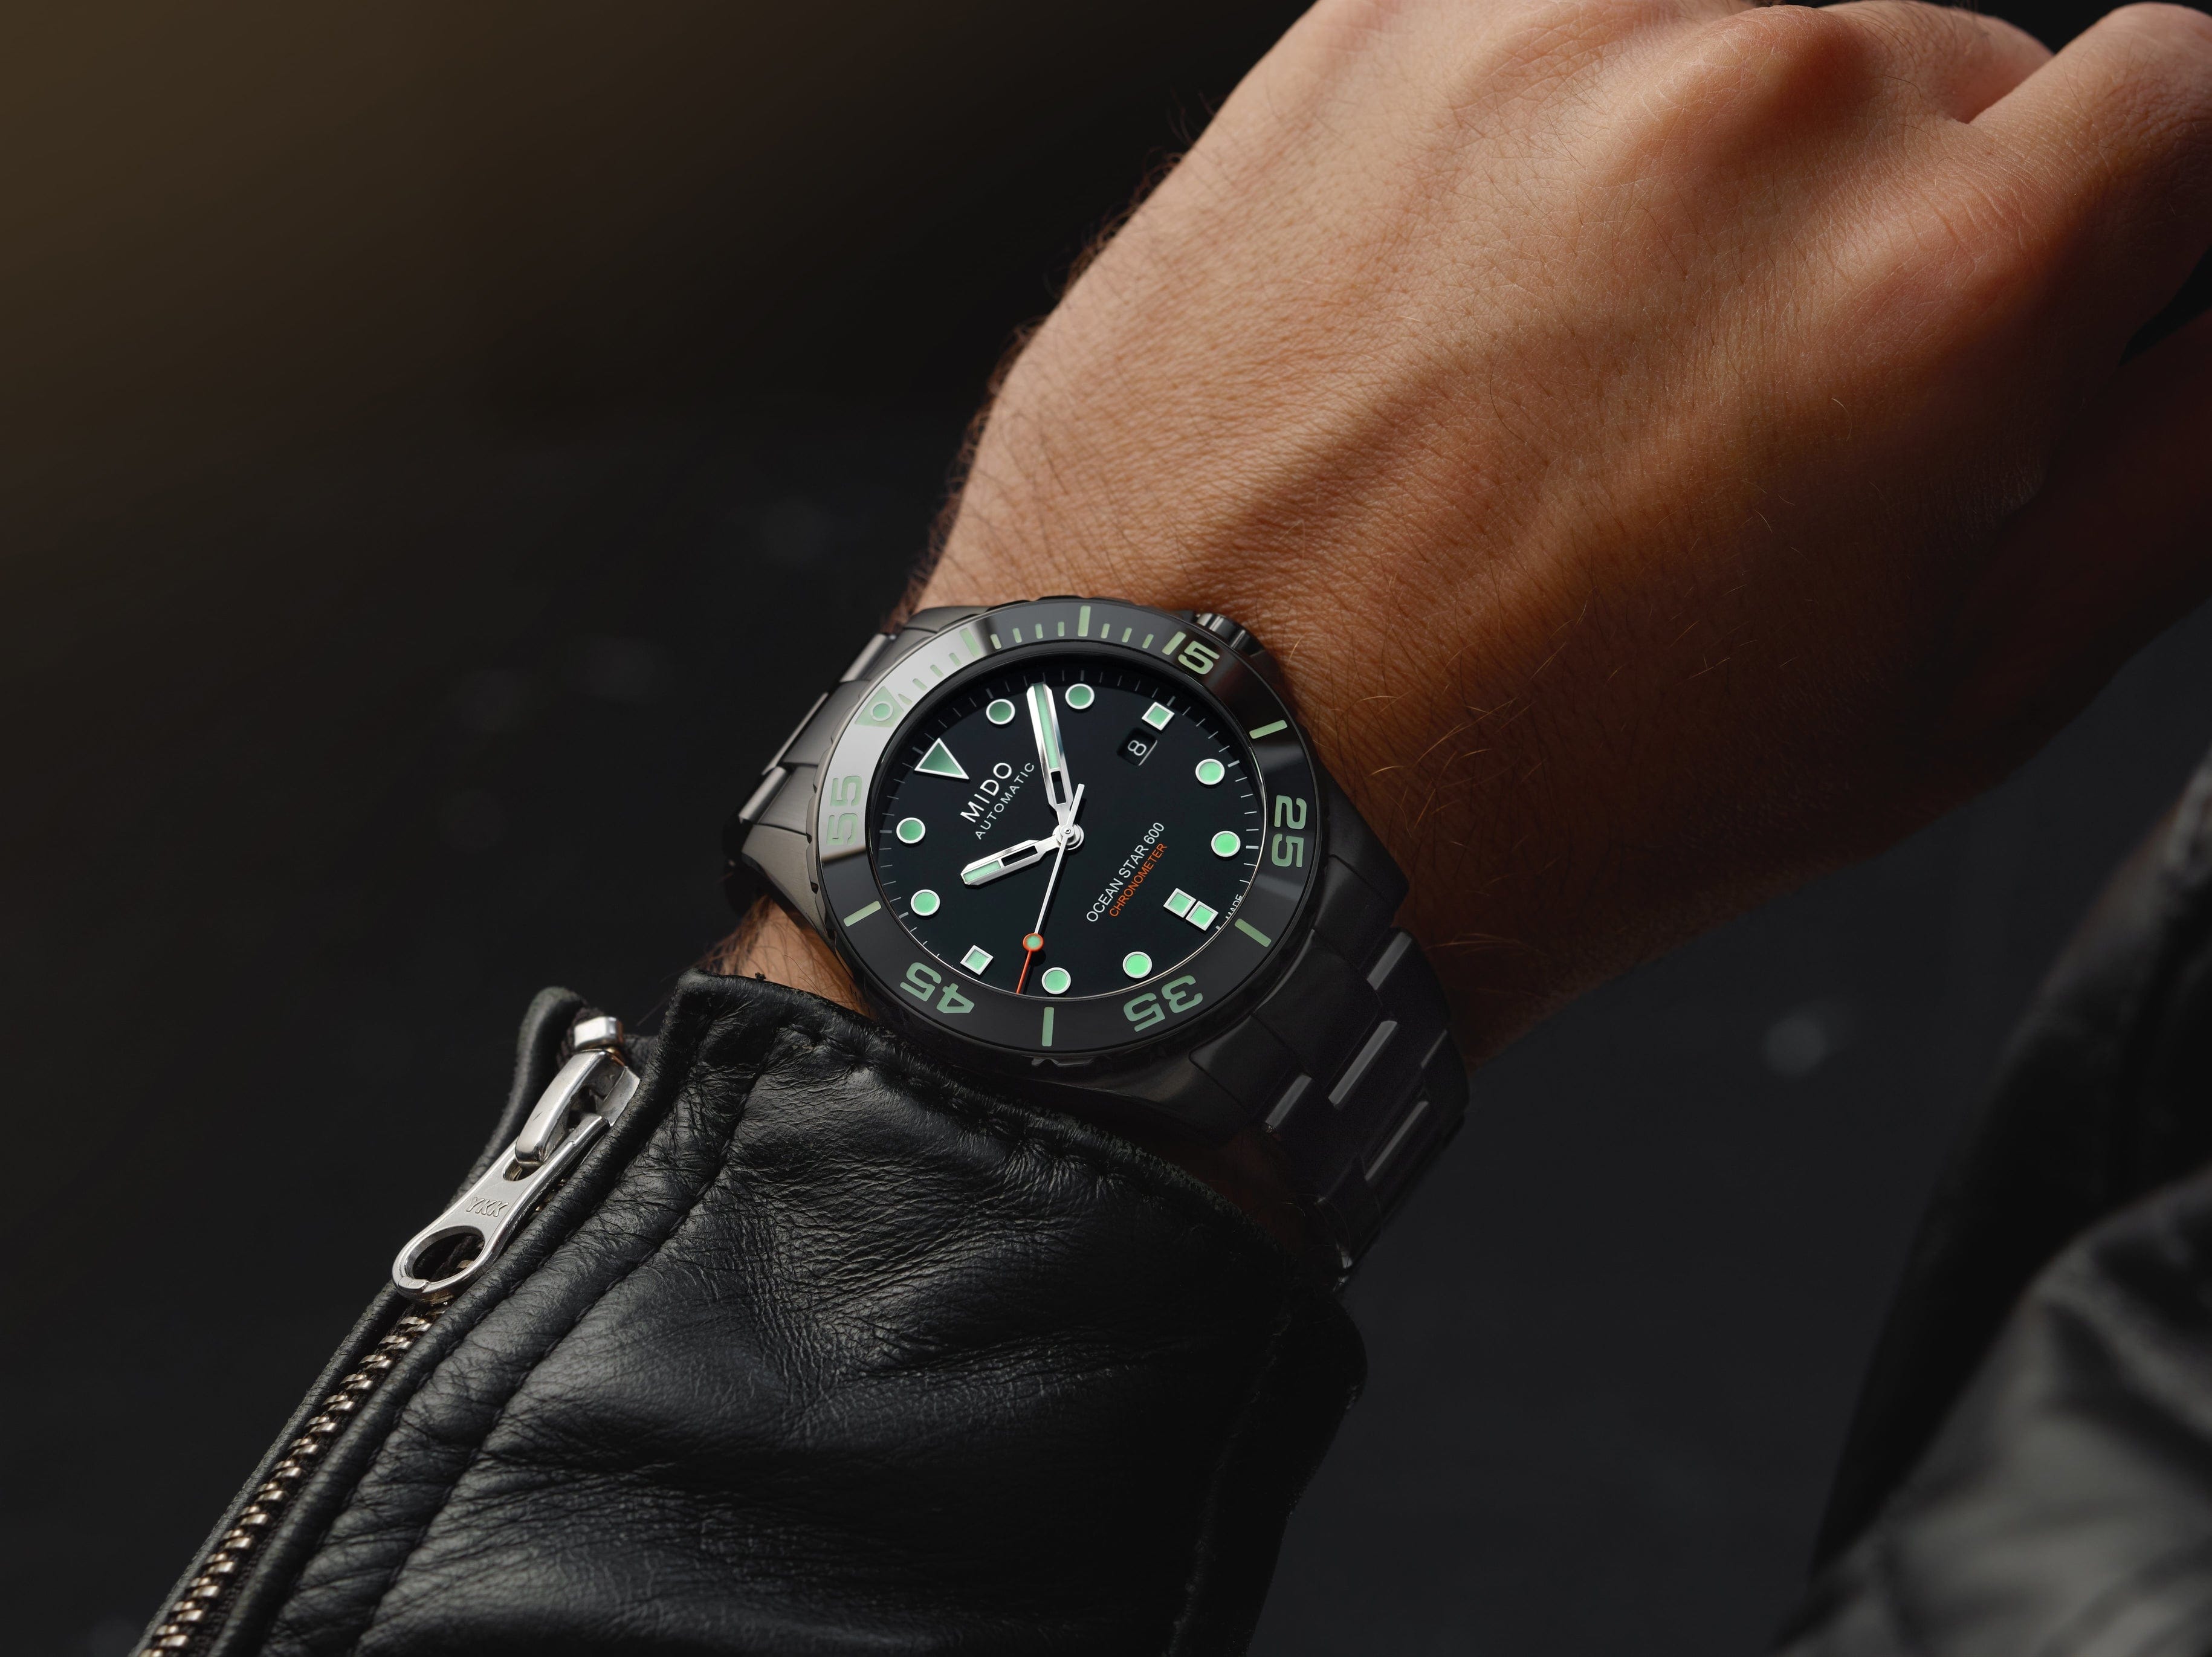 Mido Ocean Star Diver 600 Chronometer Special Edition Black Men's Watch M0266083305100